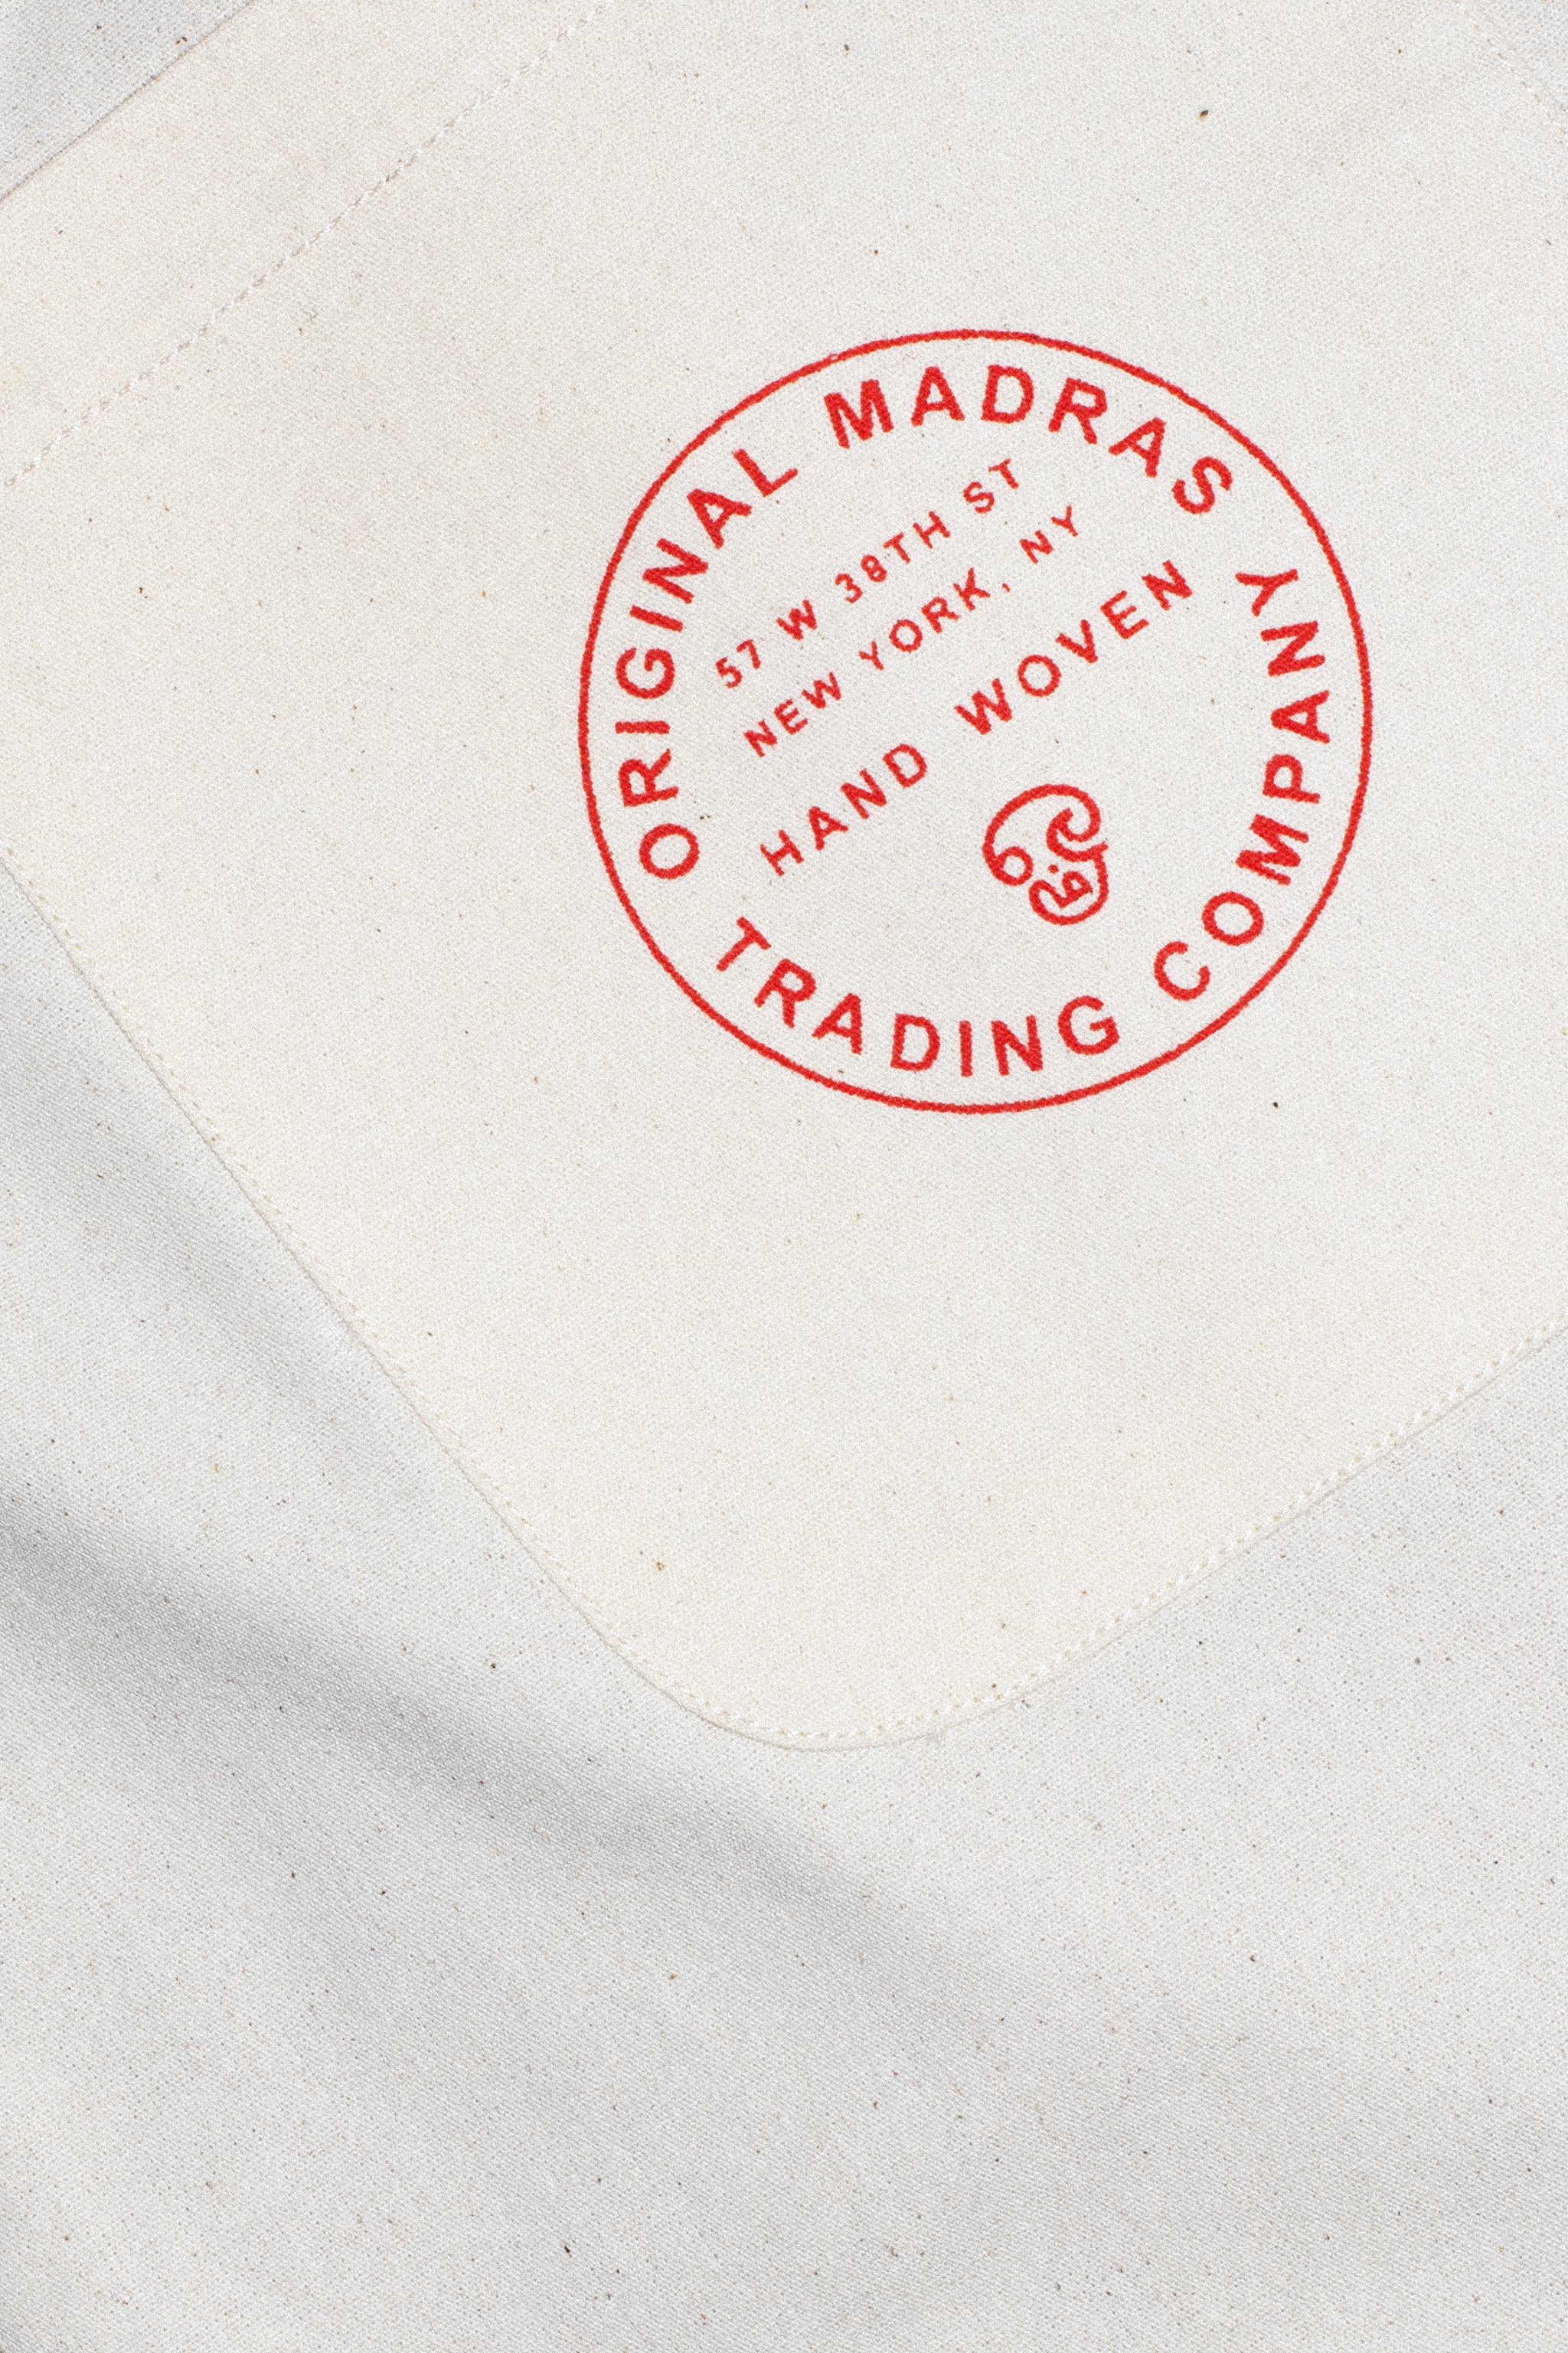 A Very Brief History: Original Madras Trading Company